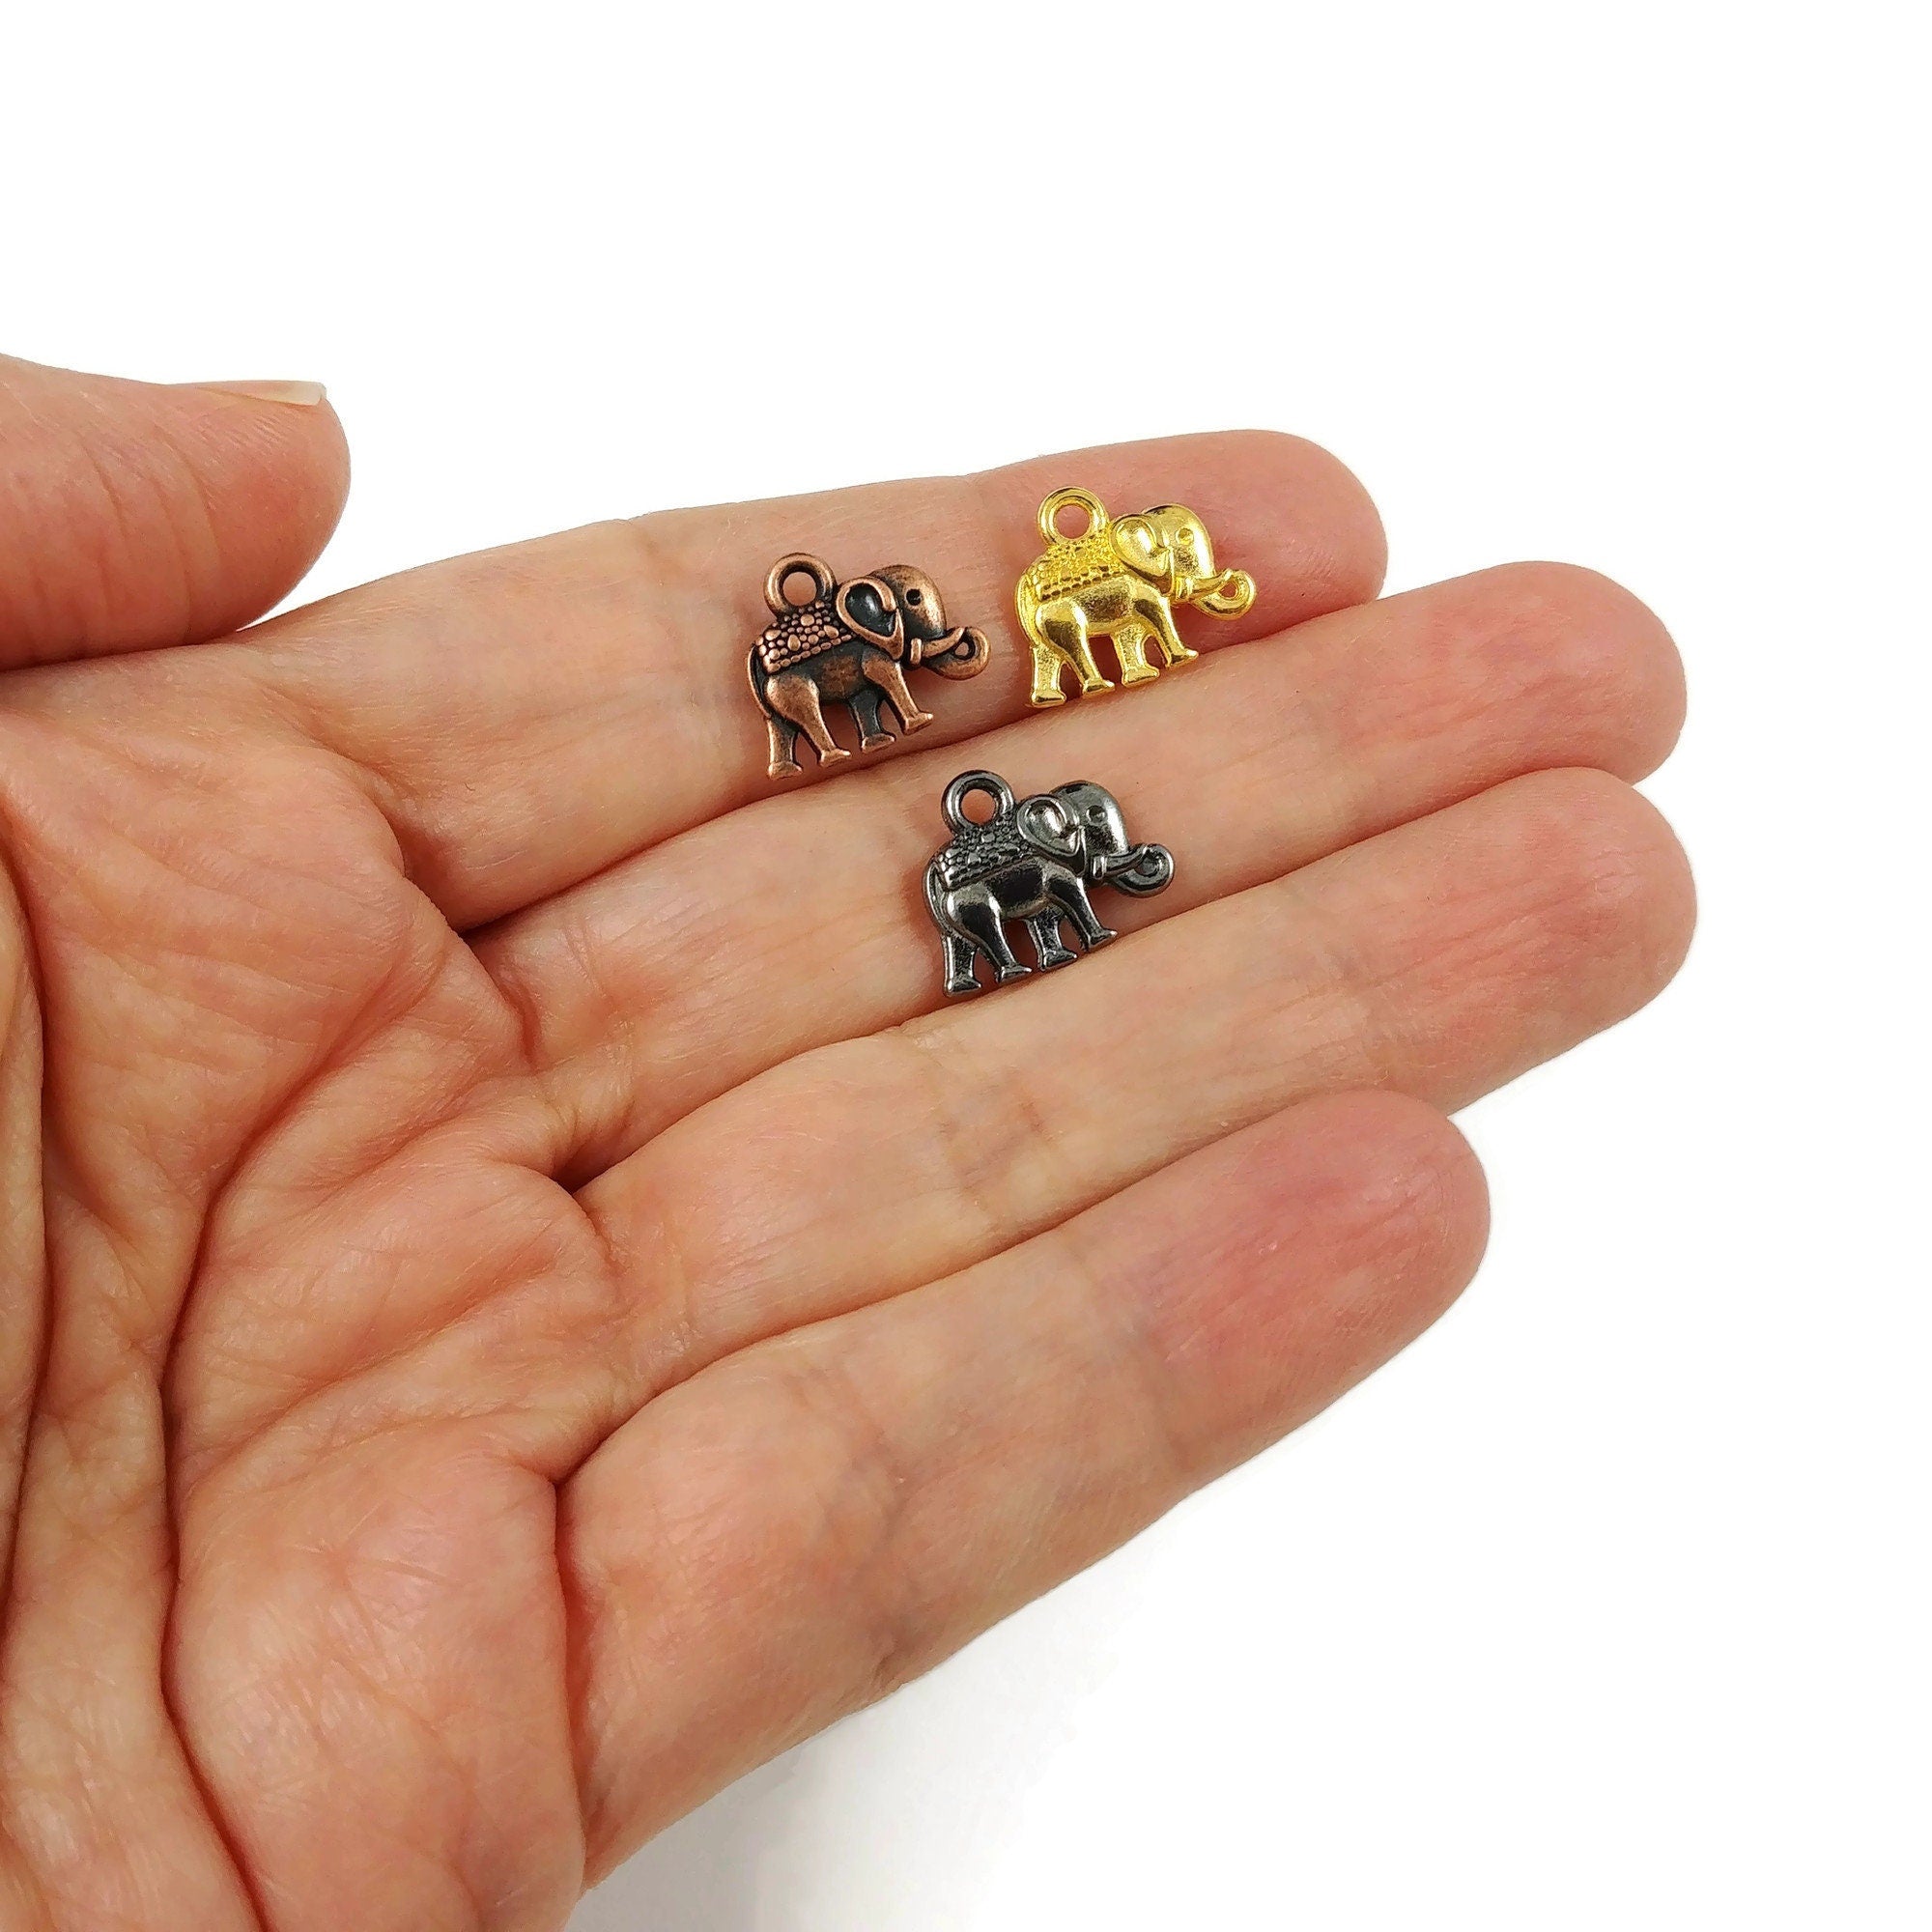 Cute elephant charms, 14mm tibetan animal charm, Gold, Silver, Copper, Nickel free metal pendants